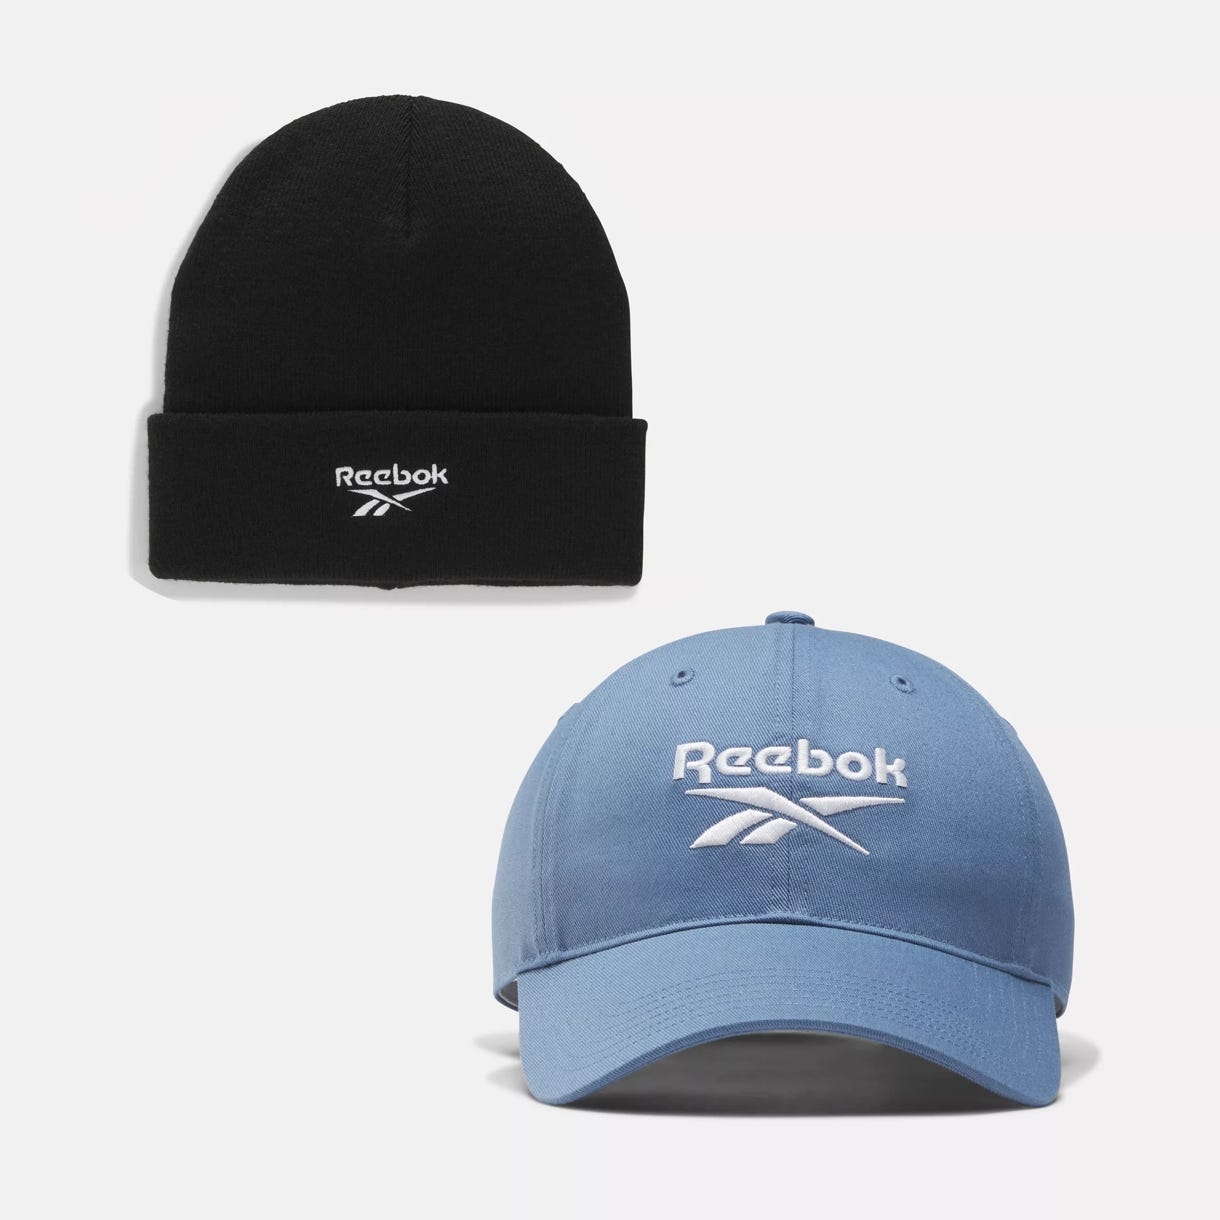 A black beanie and a light blue baseball cap, both with the Reebok logo.